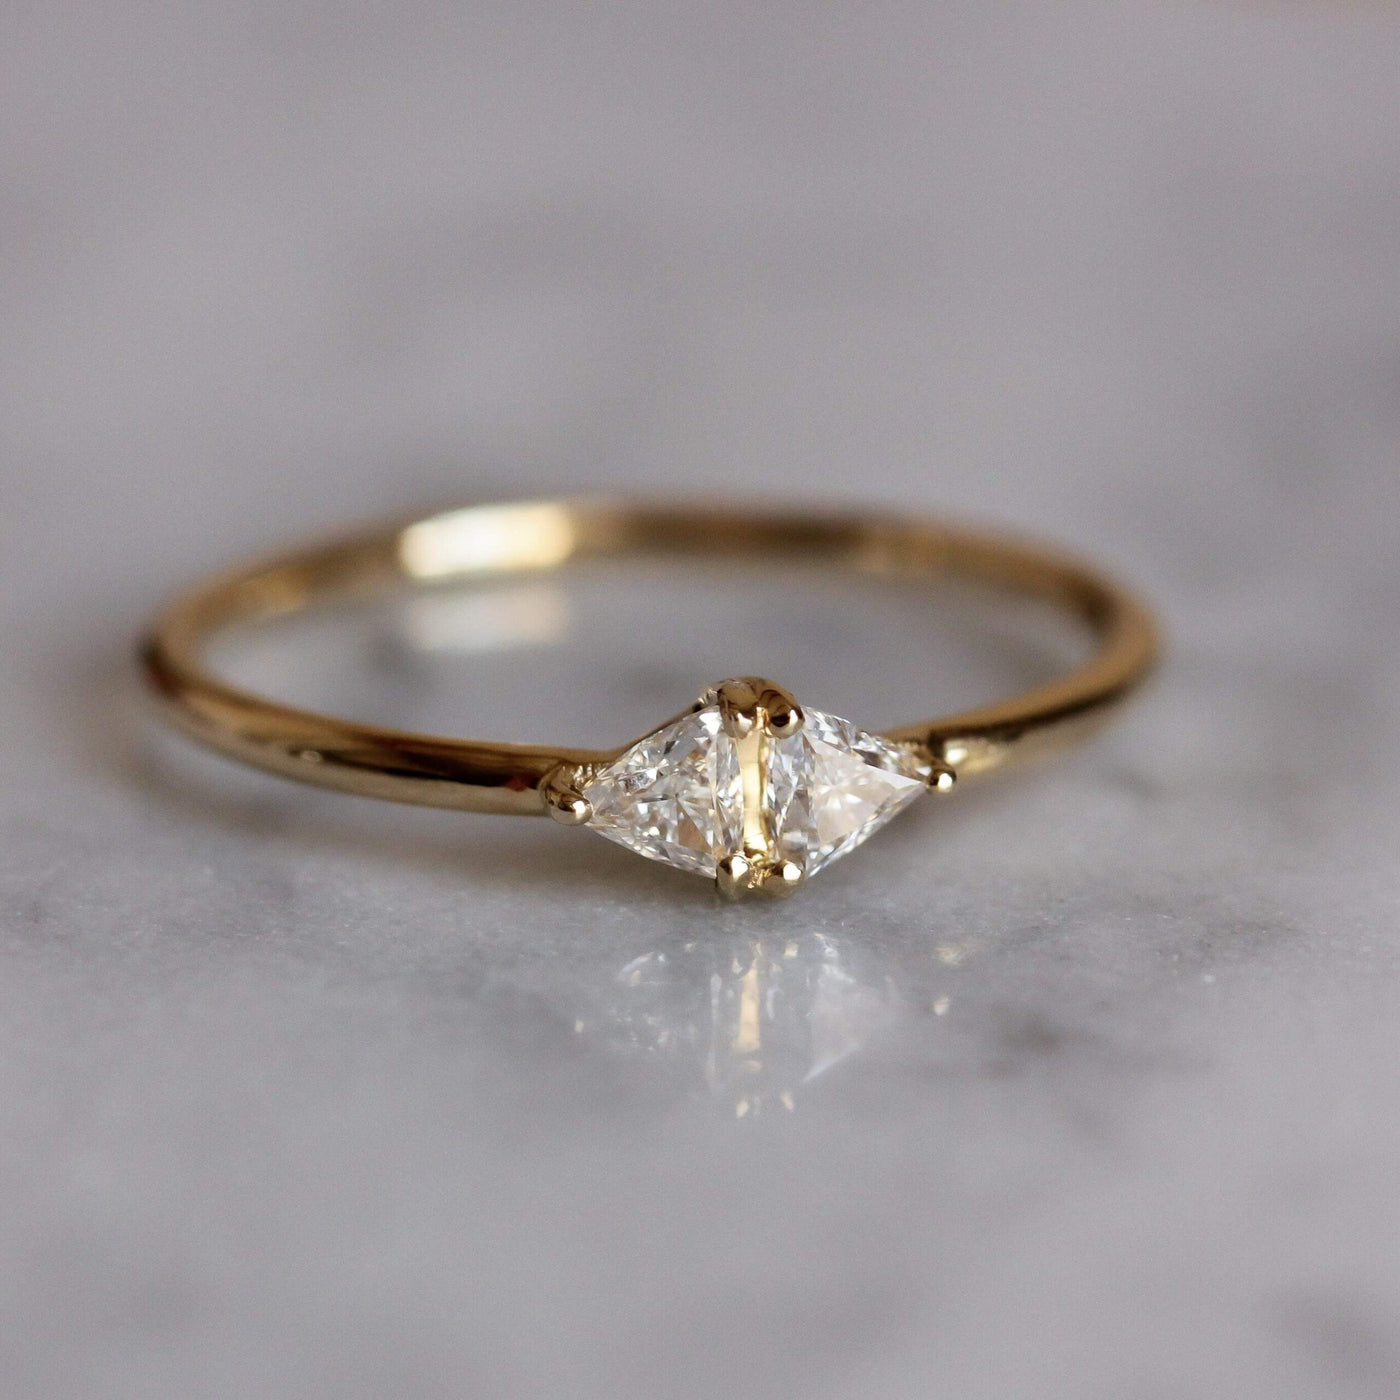 Double Hailey Ring 14K Gold White Diamonds Rings 